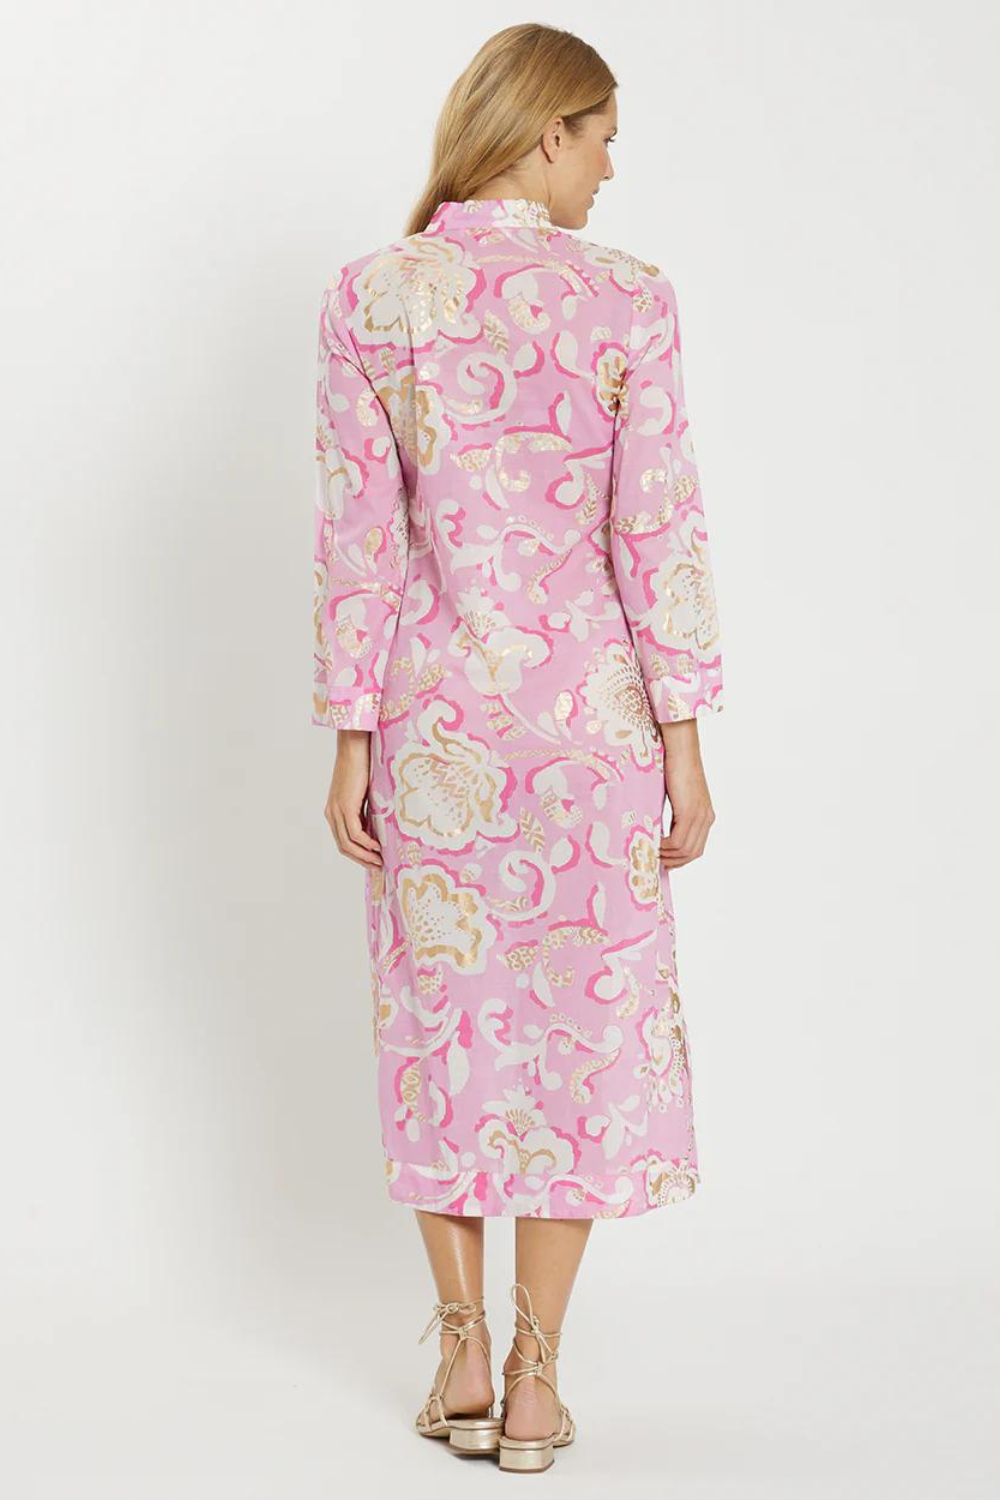 Jude Connally Lyra Long Sleeve Dress - Grand Floral Pink